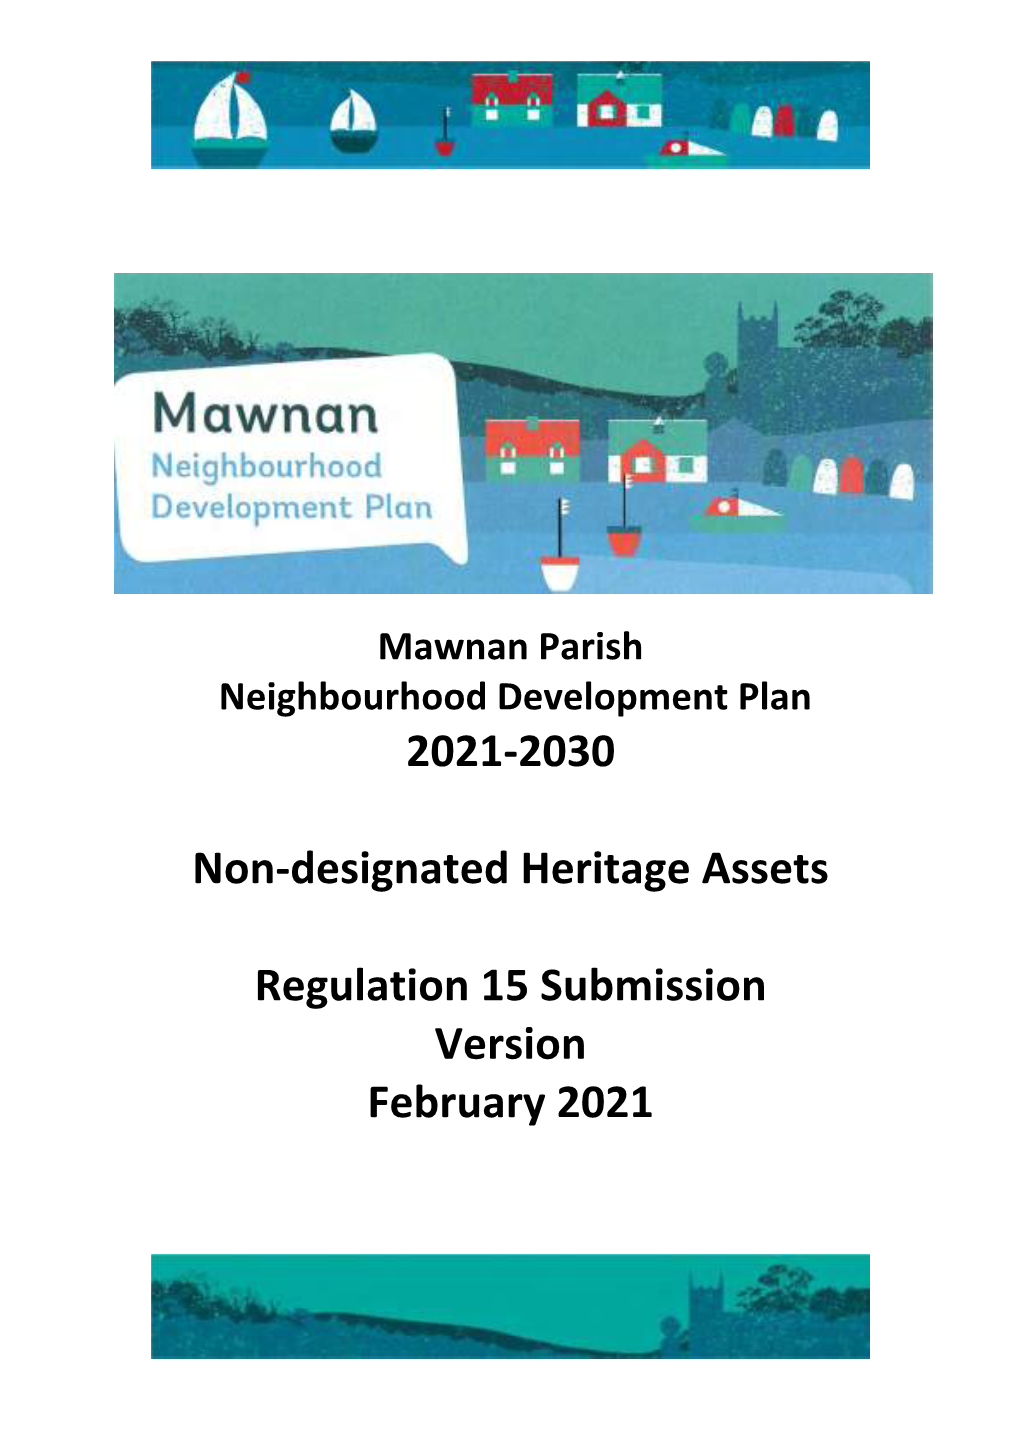 2021-2030 Non-Designated Heritage Assets